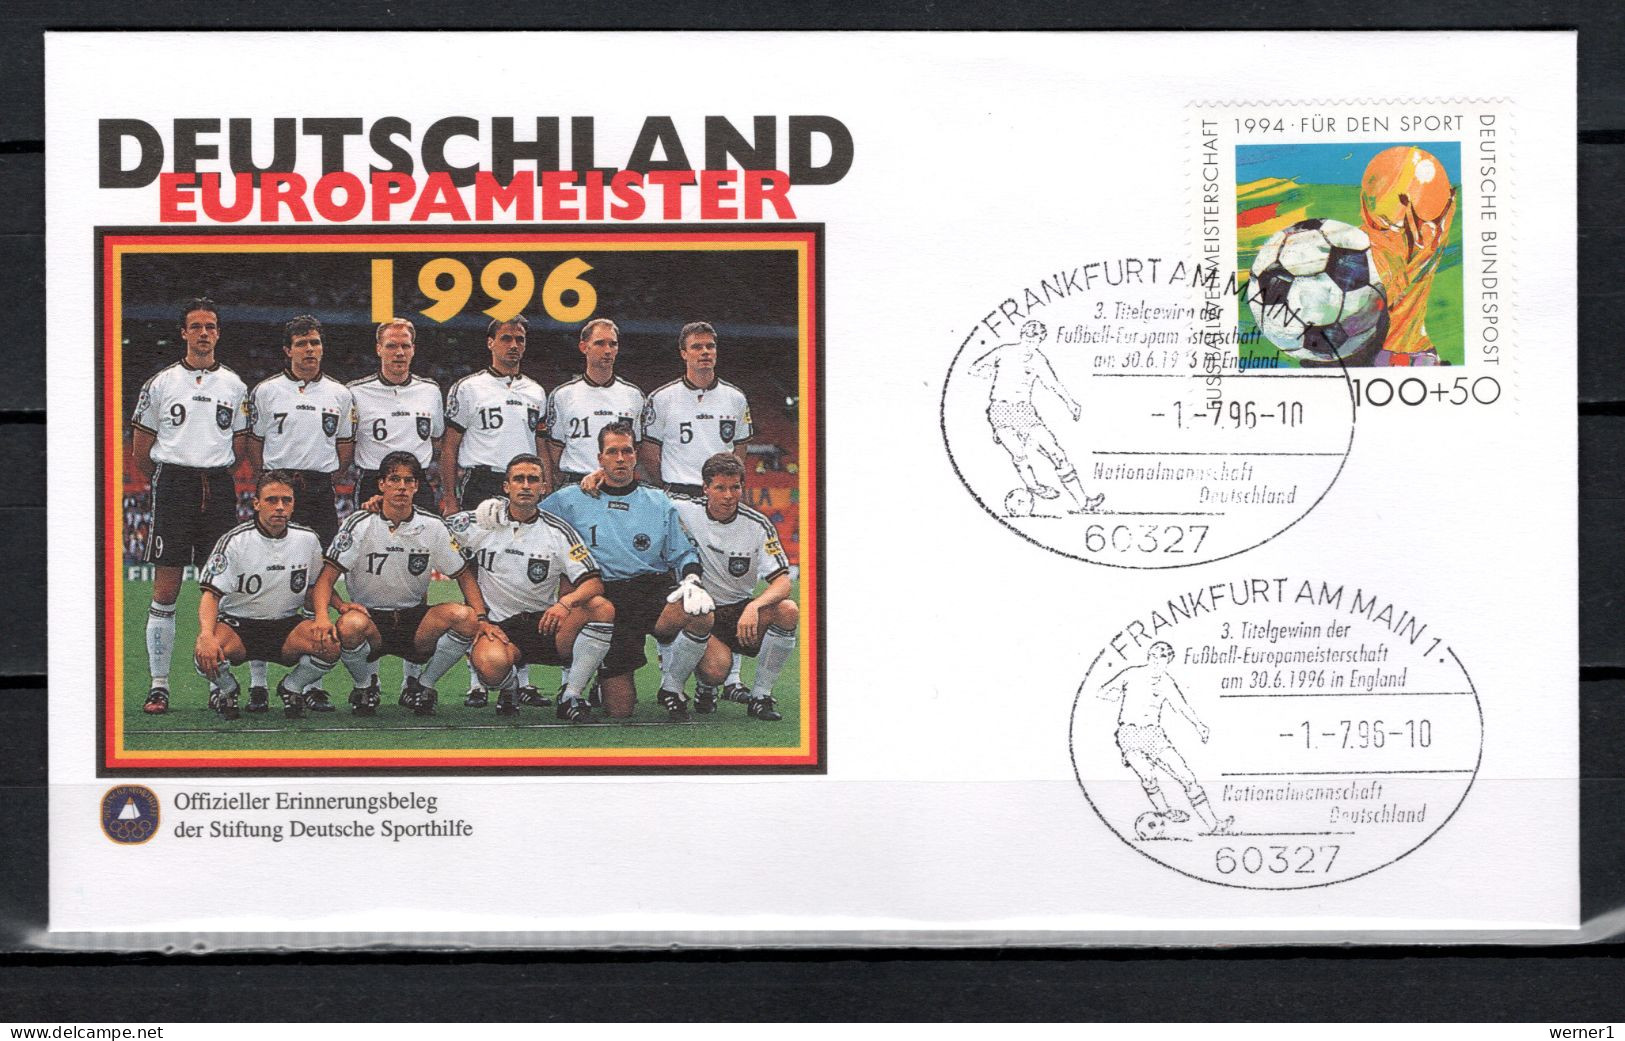 Germany 1996 Football Soccer European Championship, Germany European Champion Commemorative Cover - UEFA European Championship